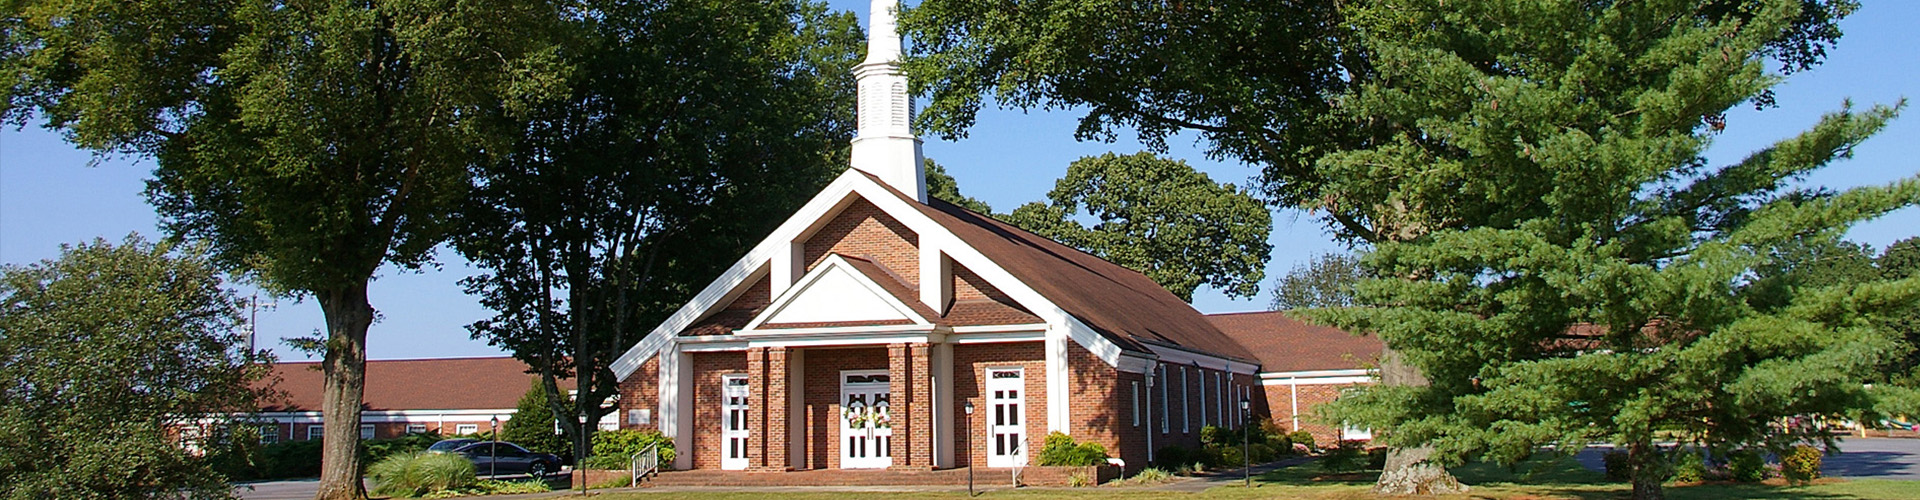 I'm New - Gilwood Presbyterian Church - Concord, Nc